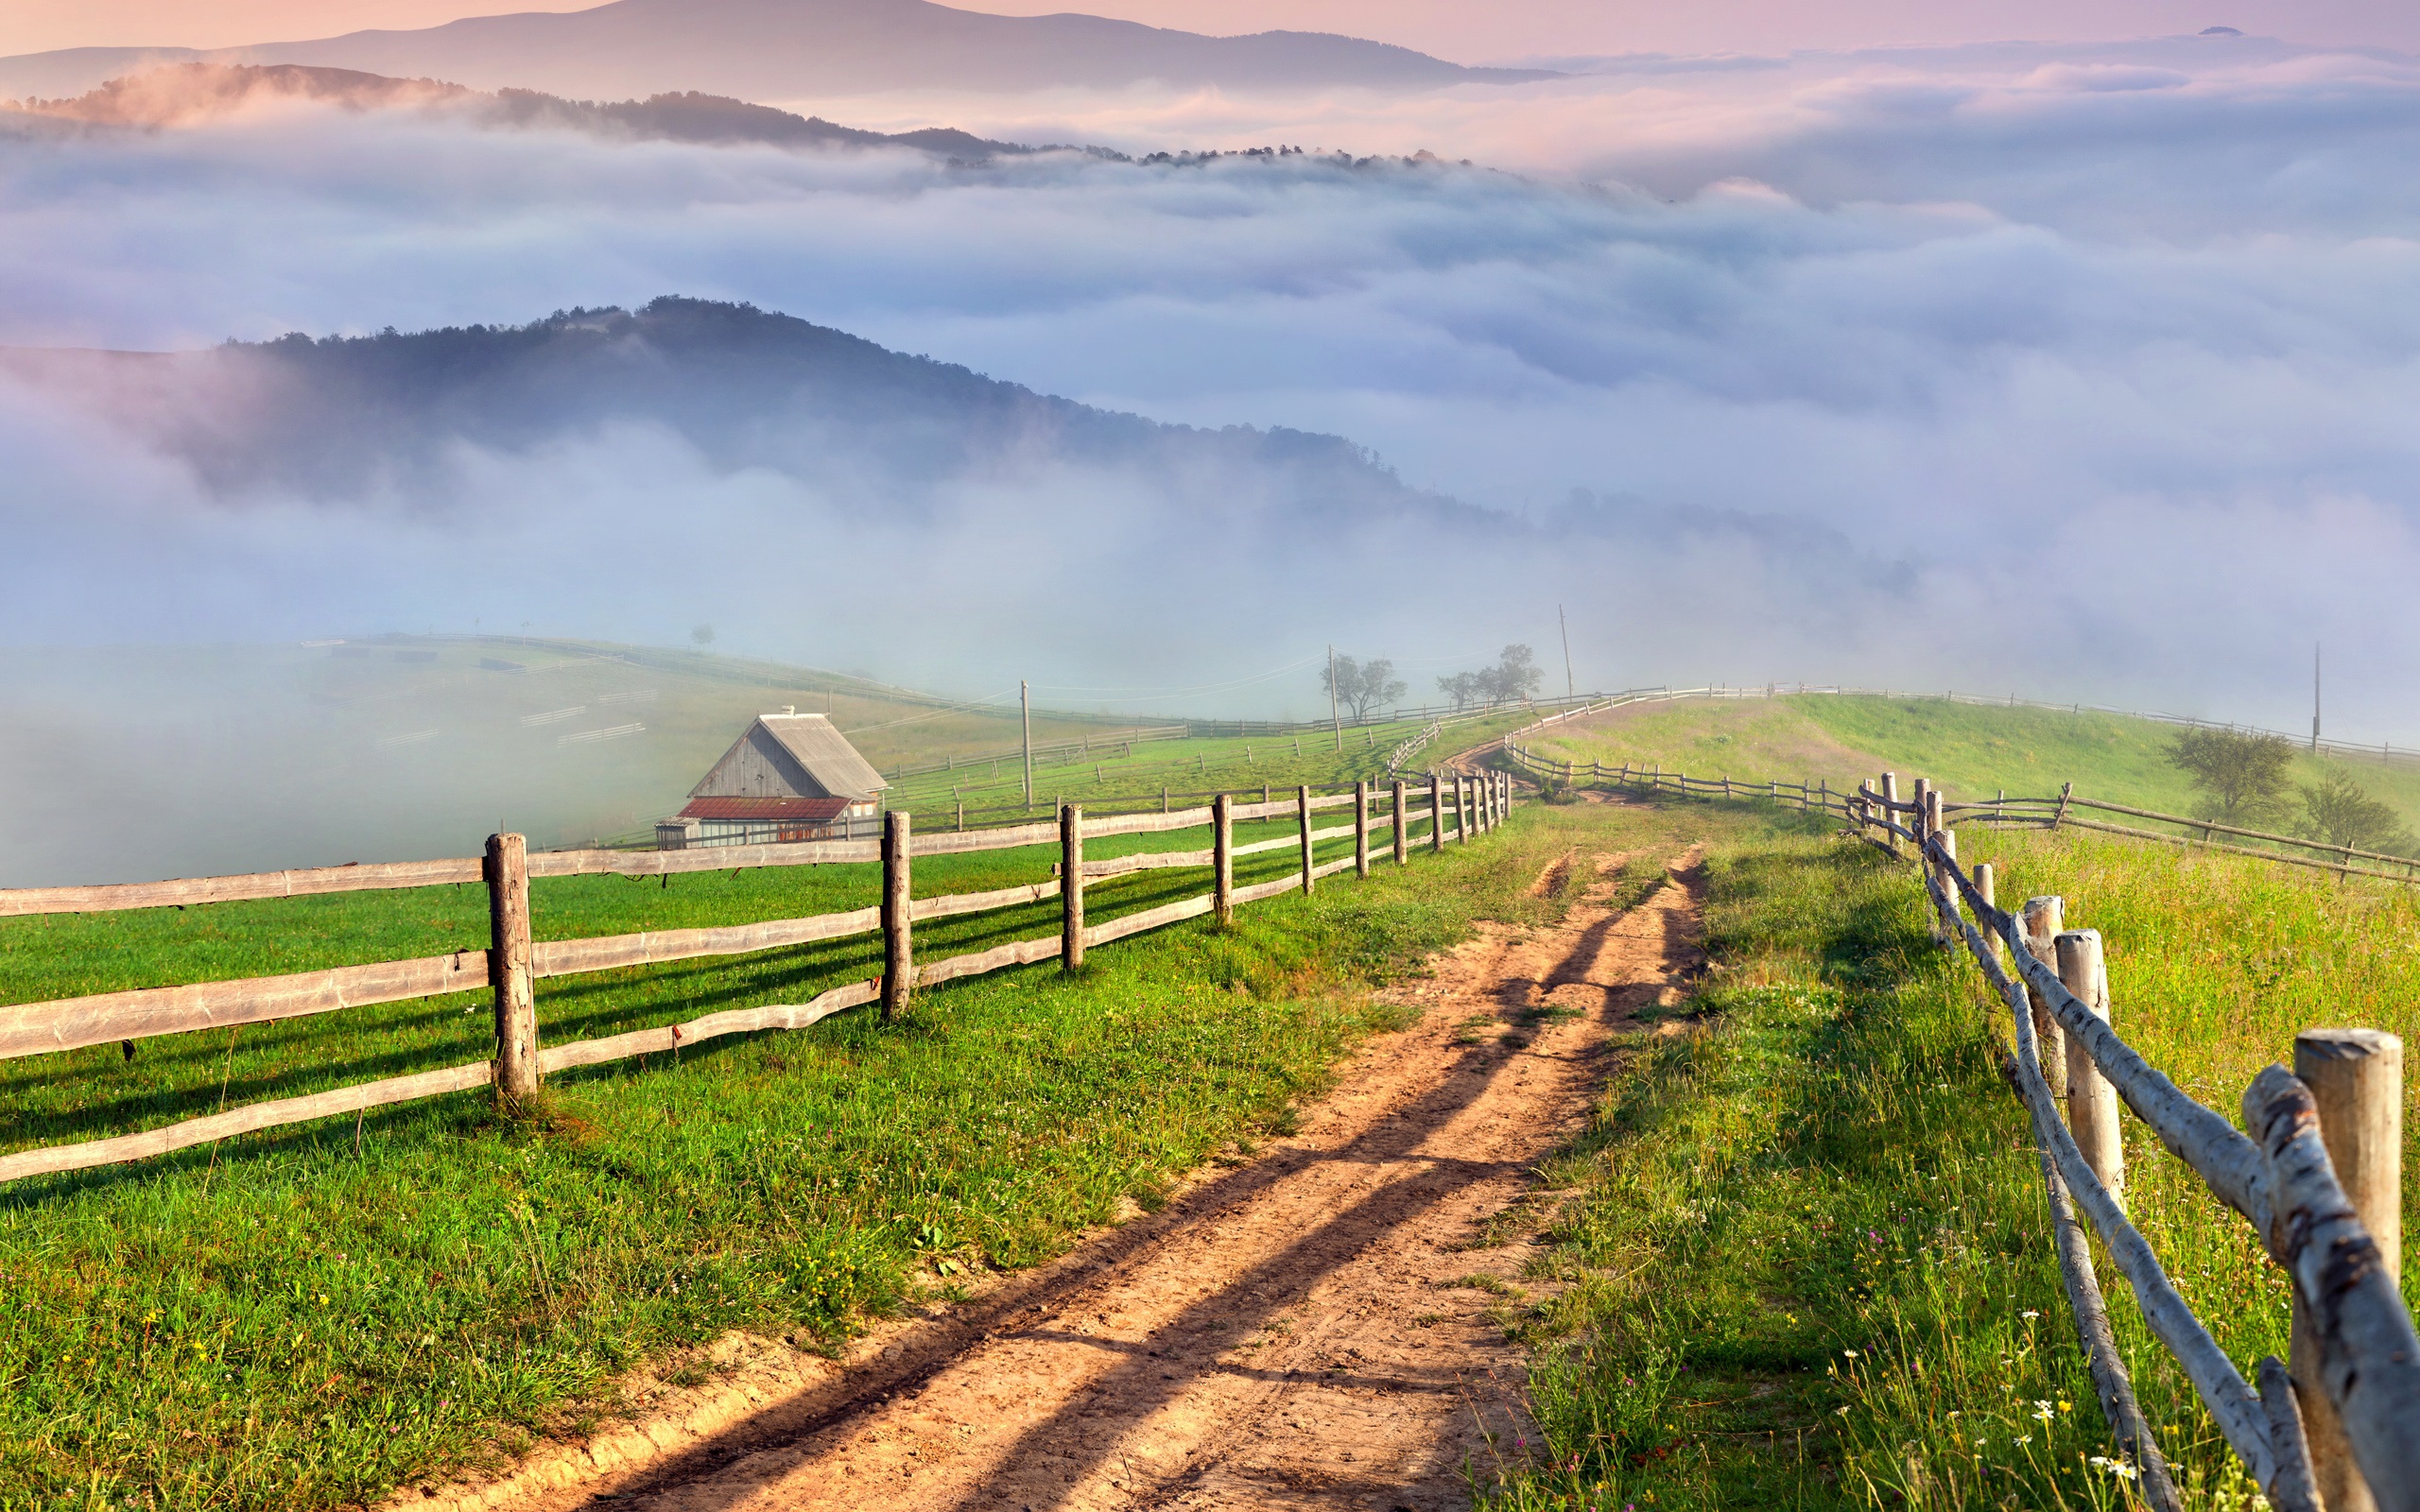 dusk country landscape desktop wallpaper high definition